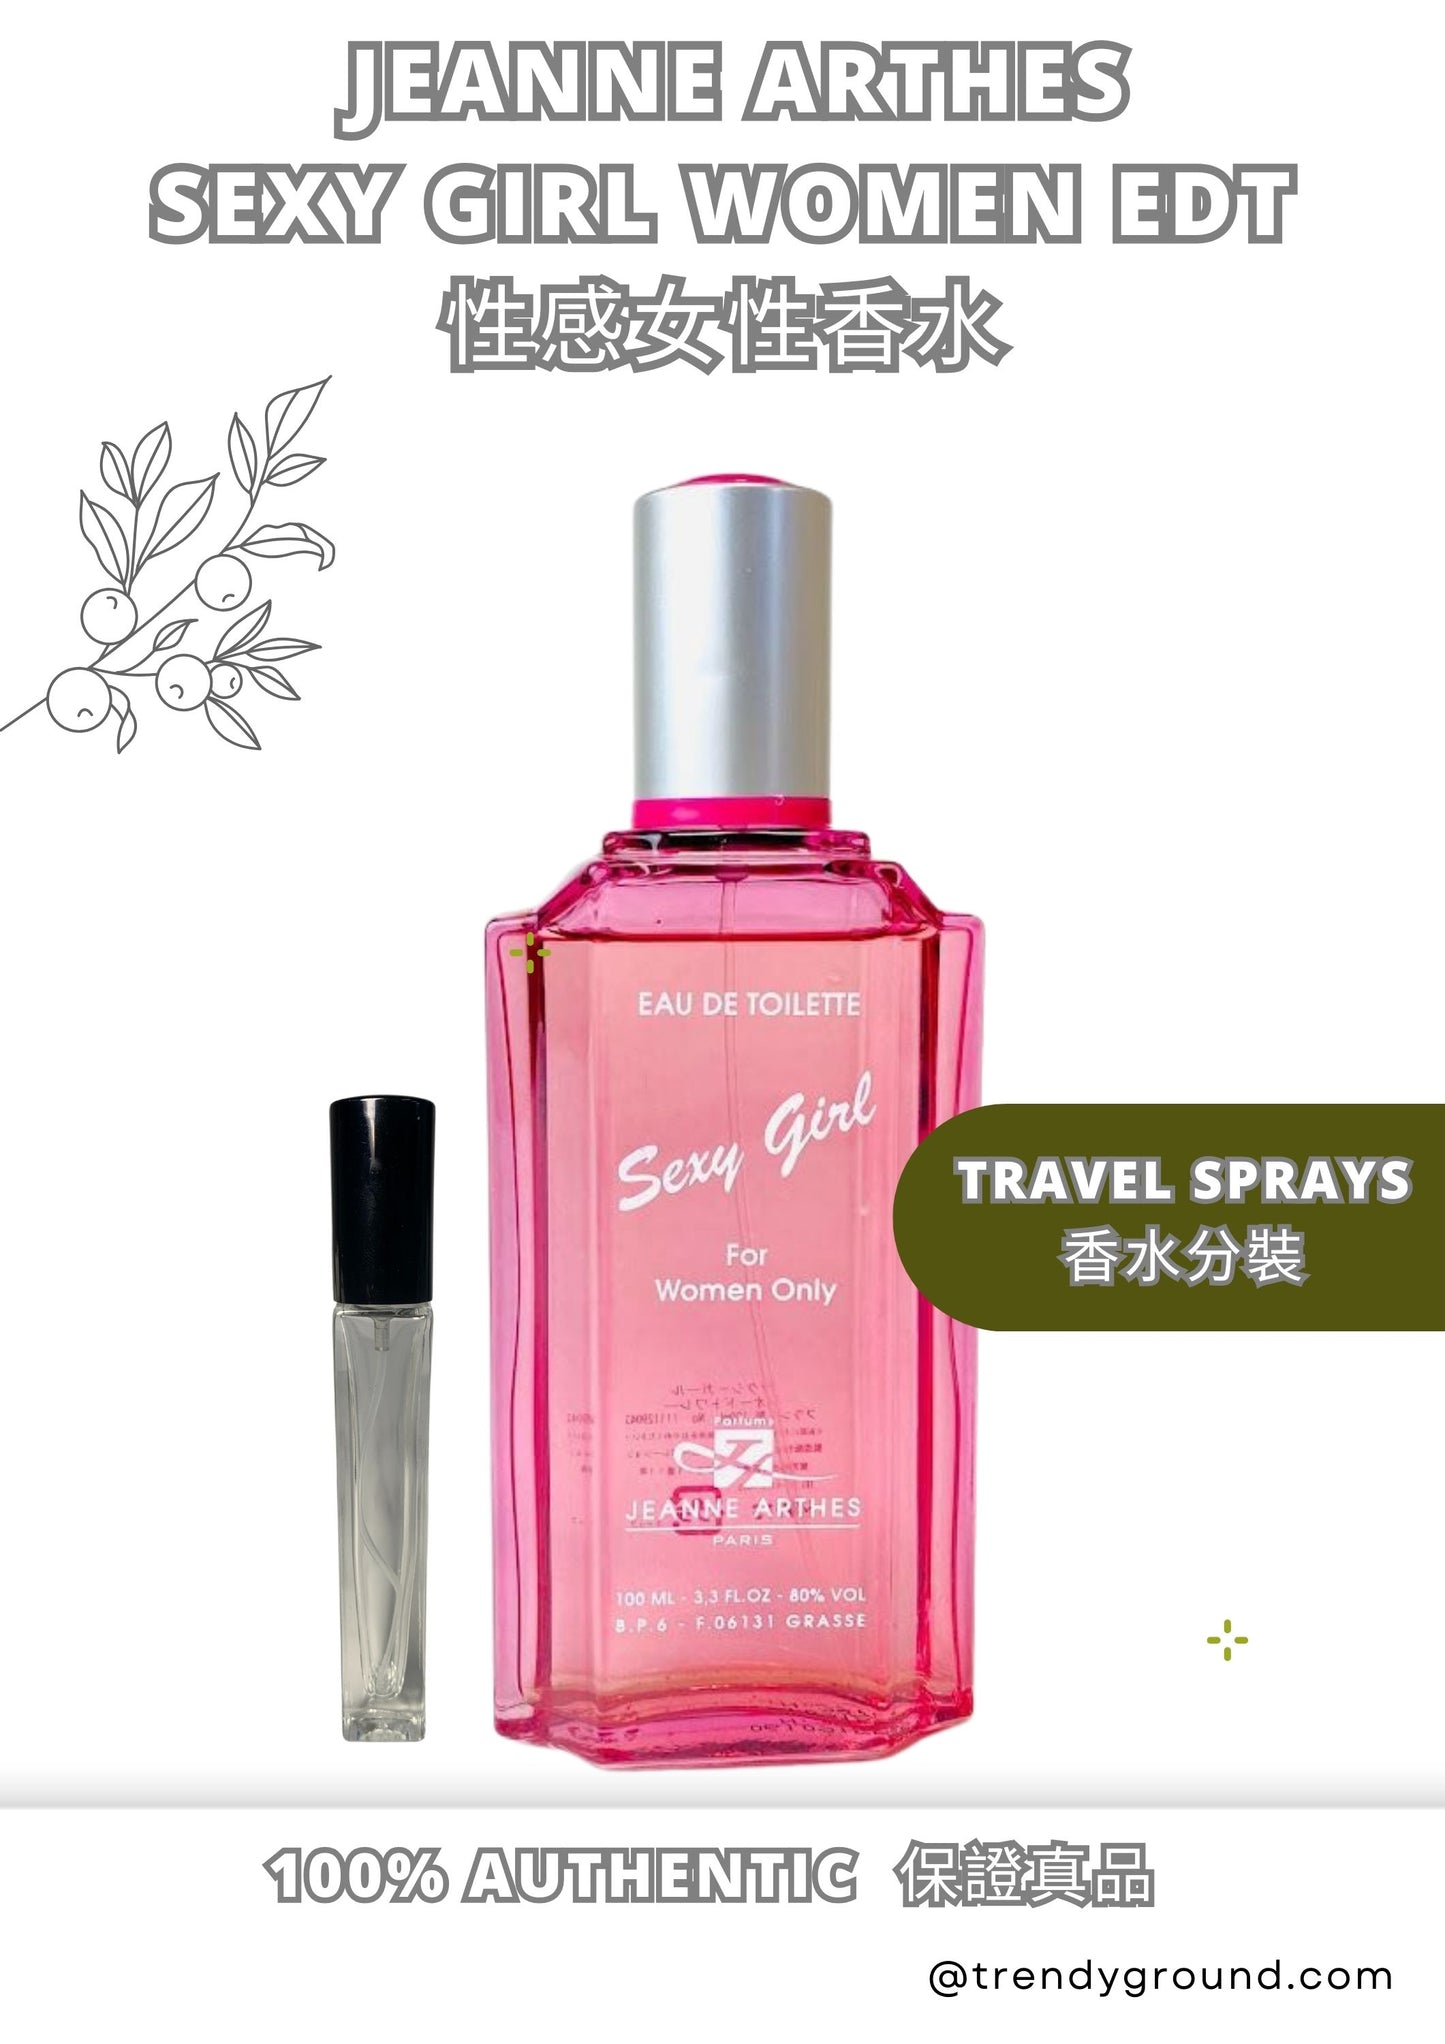 Jeanne Arthes SEXY Girl EDT Travel Sprays sample 性感女性香水 分裝瓶